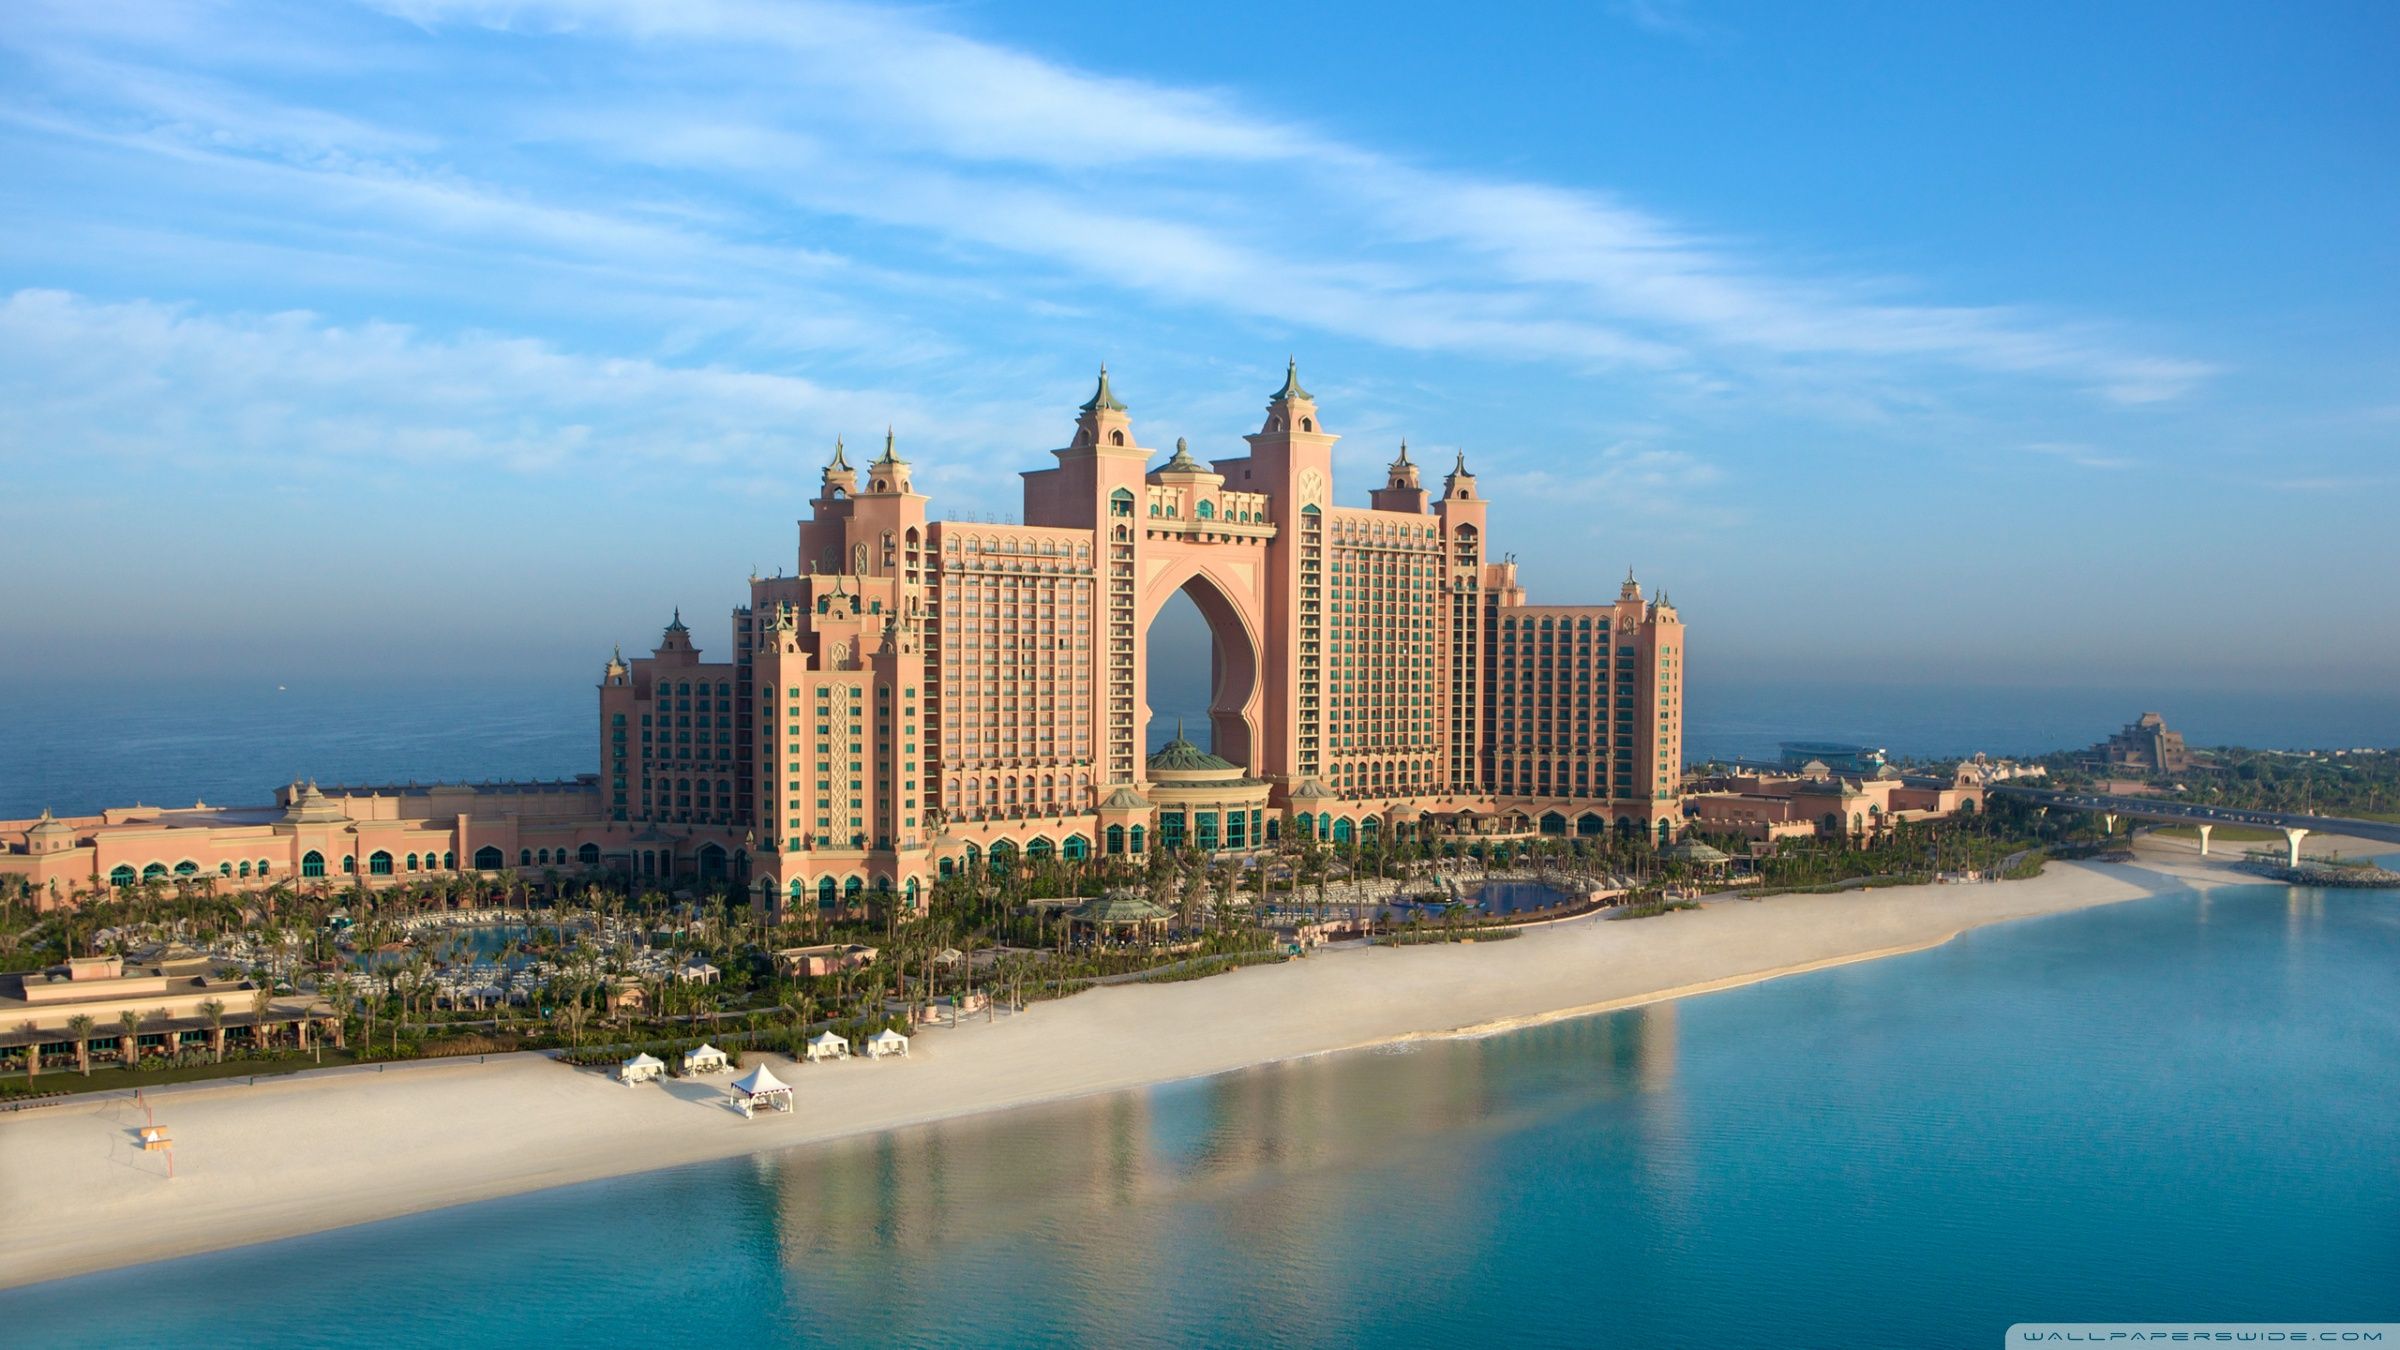 Atlantis Hotel Dubai Ultra HD Desktop Background Wallpaper for 4K UHD TV, Multi Display, Dual Monitor, Tablet